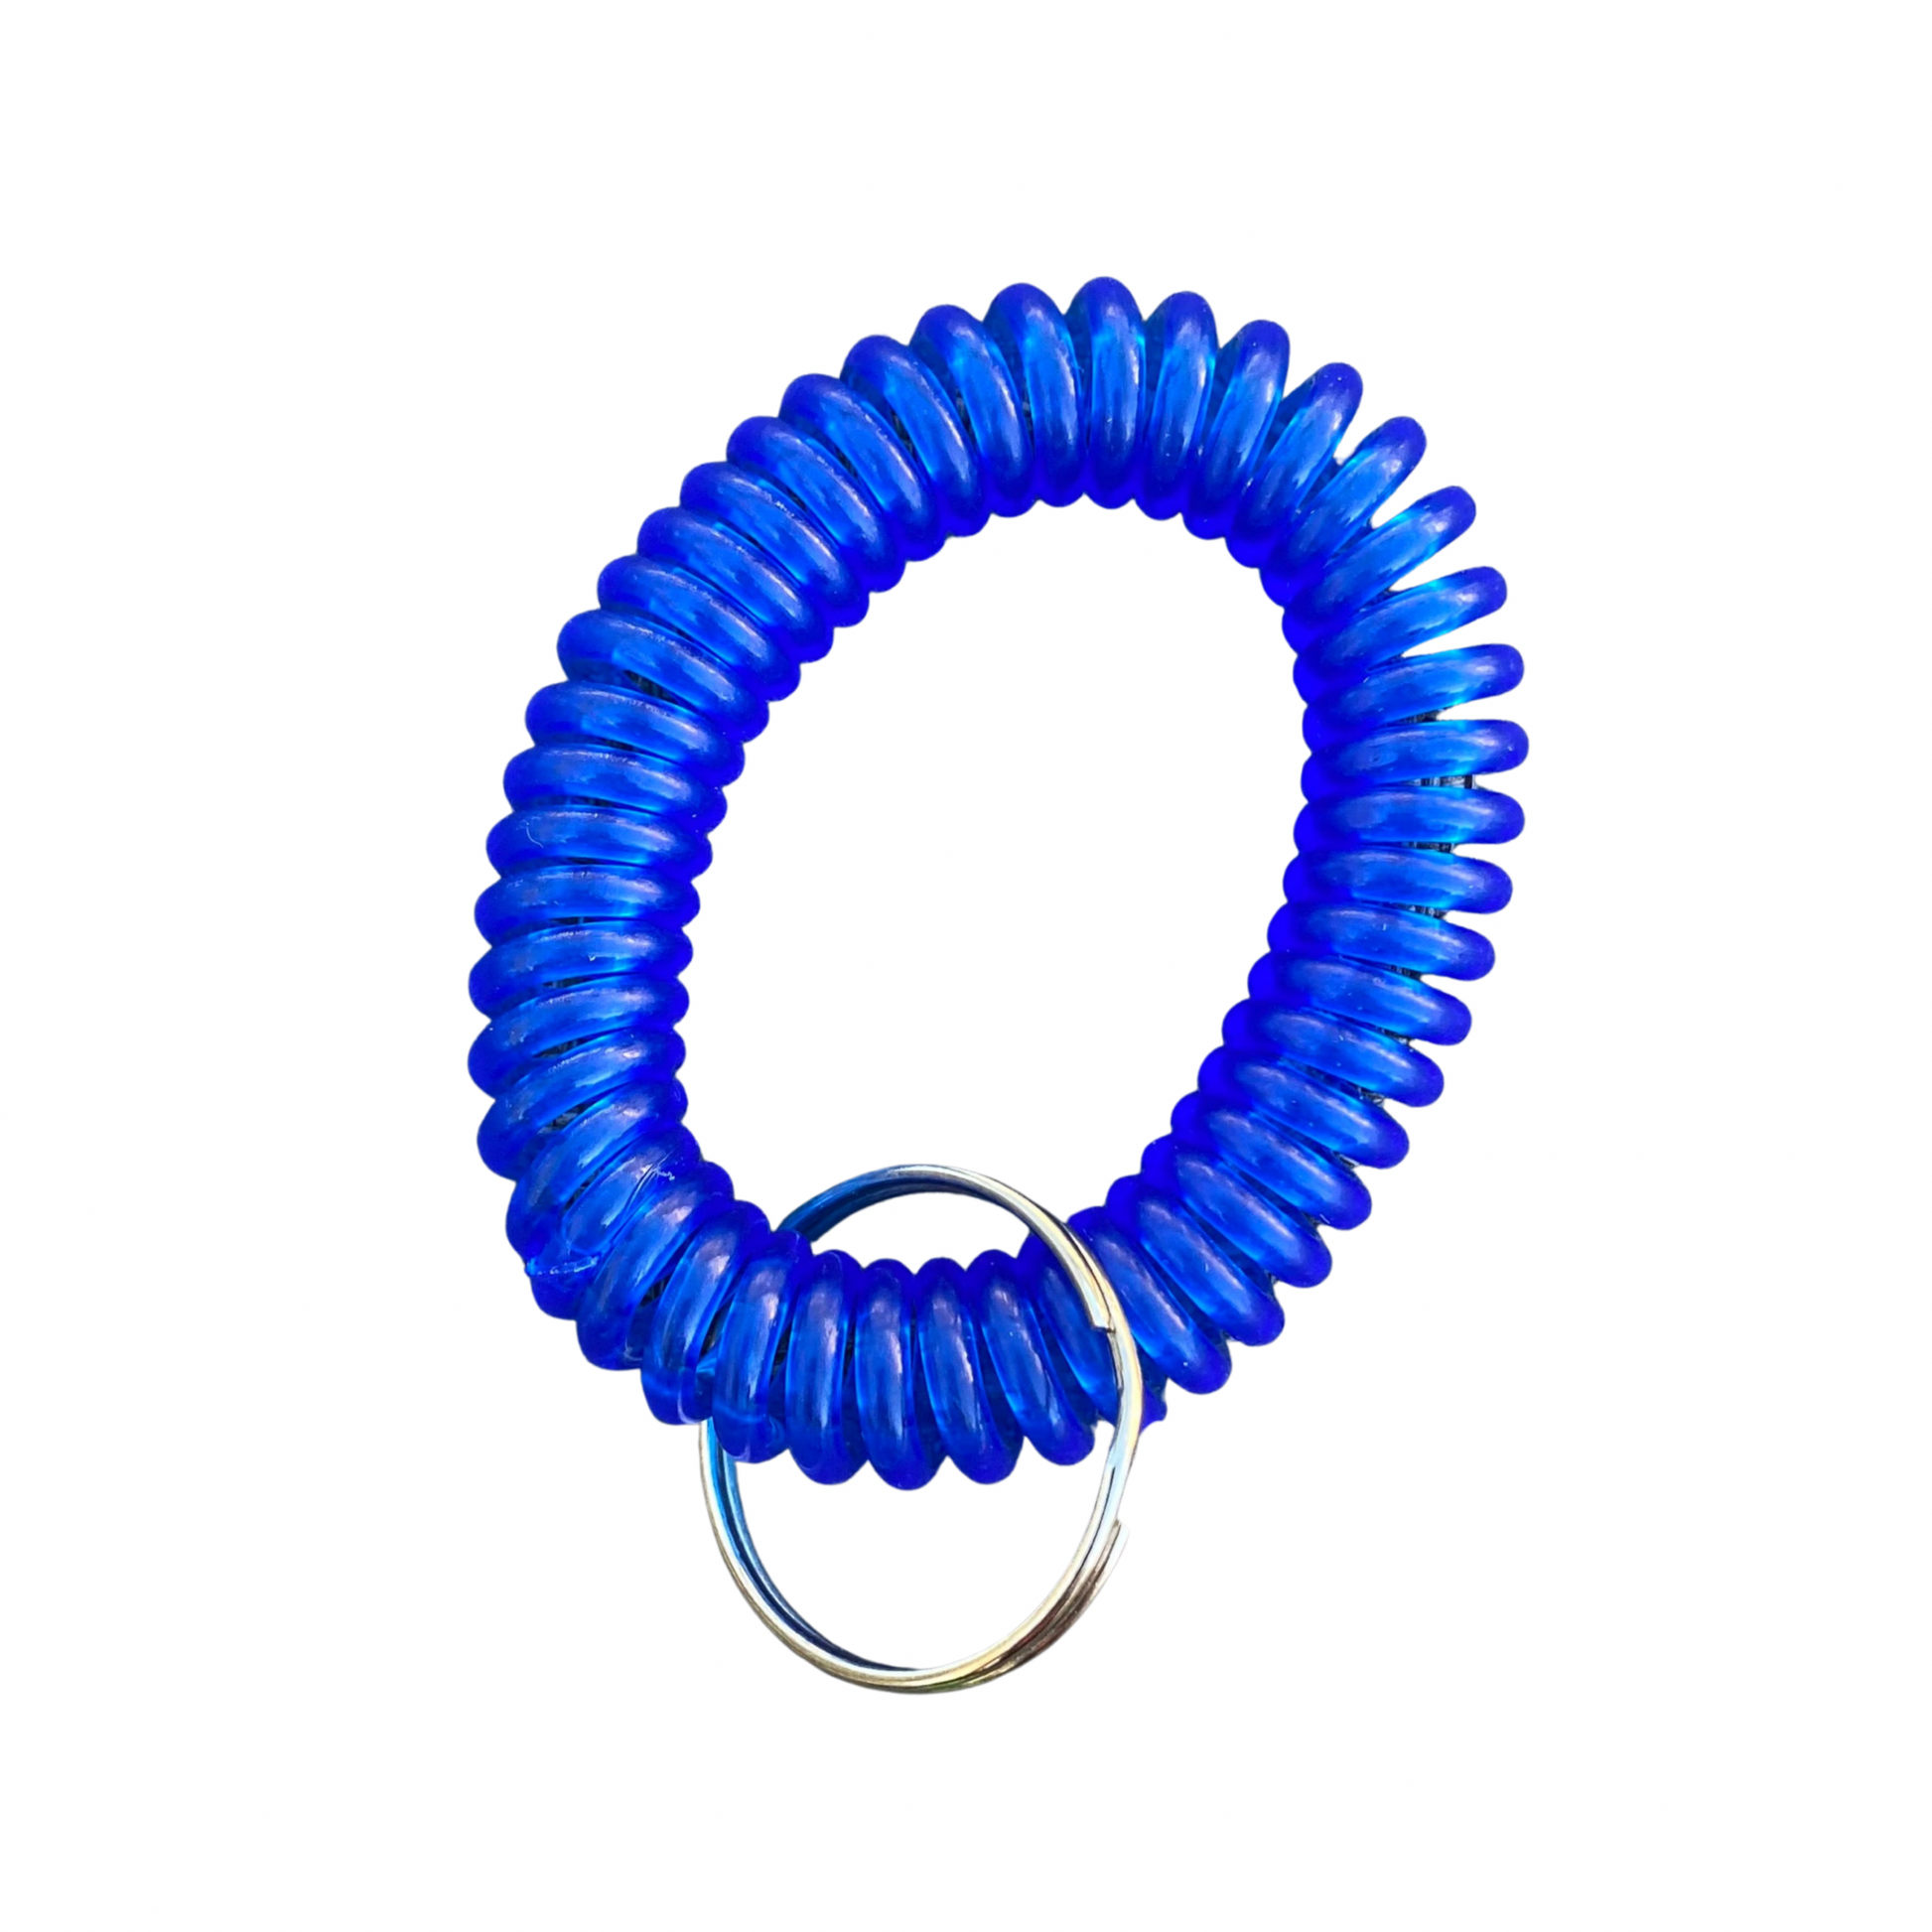 Stretchy Key Bracelet  SPIRIT SPARKPLUGS Dark Blue  